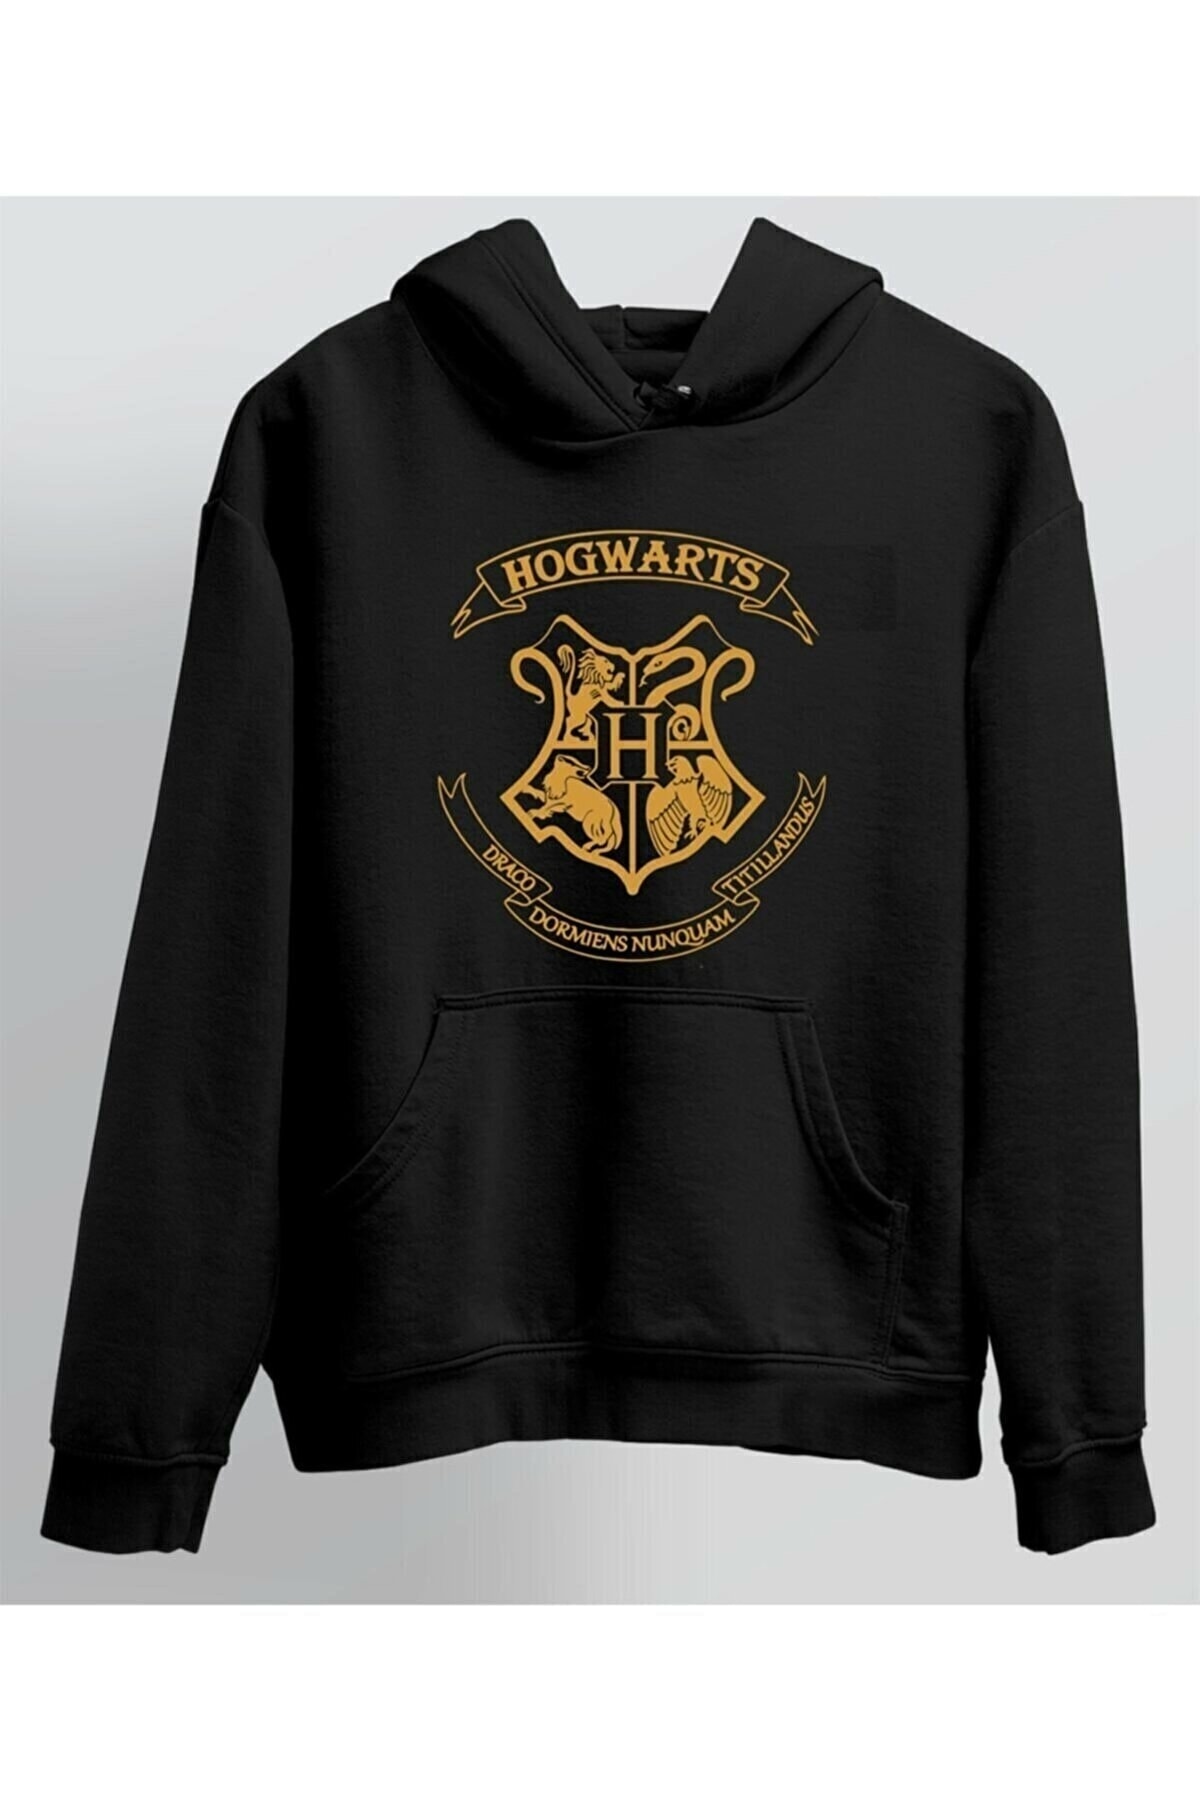 WildPhire Boutique Hogwarts Harry Potter Kapüşonlu Hoodie Sweatshirt Adv-hogwarts-001 BY11210